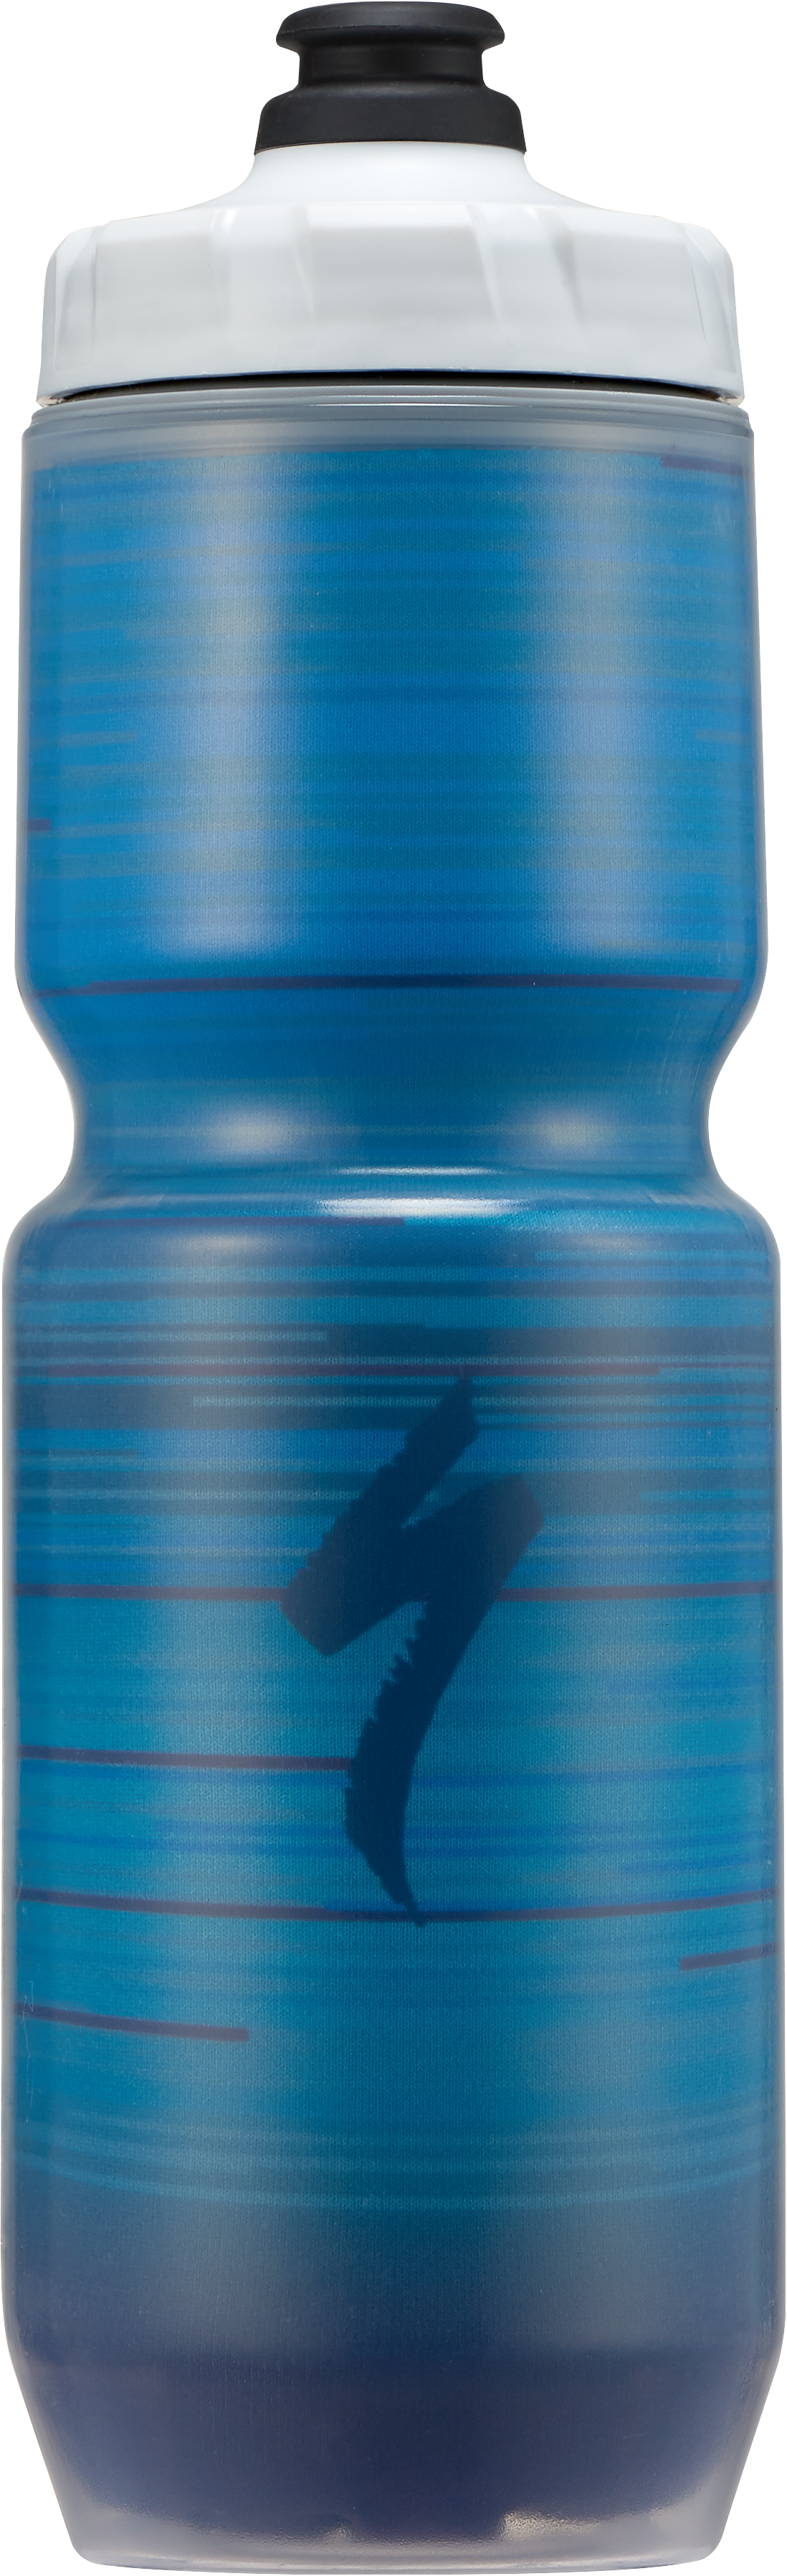 Salsa Purist Insulated Water Bottle - 23oz, Sundowner, Multi Color